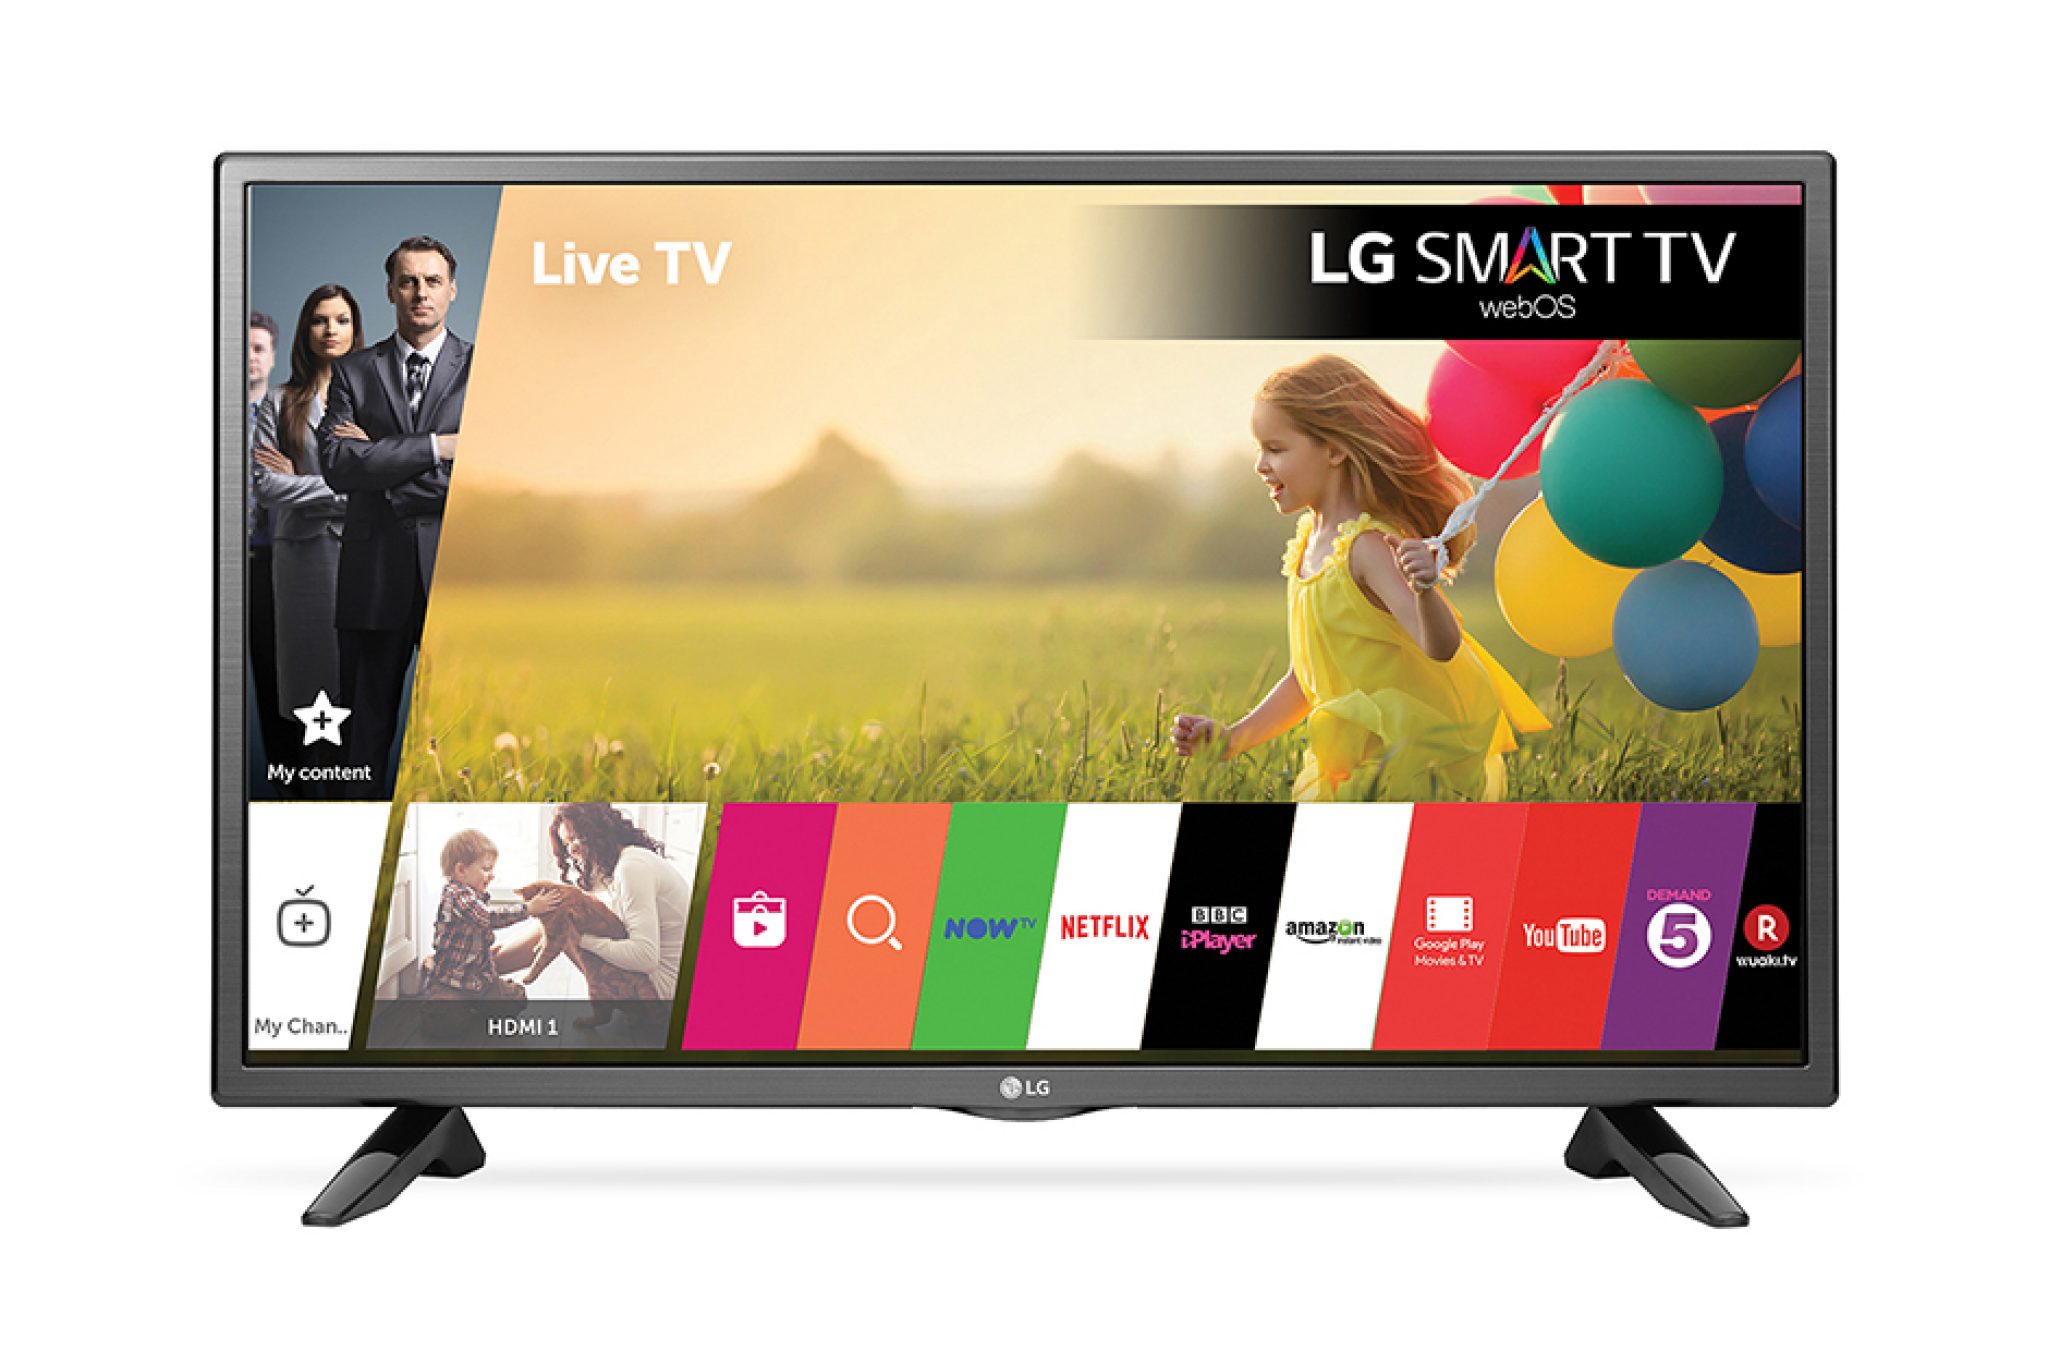 Тюнер телевизоров lg. LG 43" led Smart TV. Телевизор LG Smart TV WEBOS. LG 43lh570v. LG Smart TV 43lh570v.